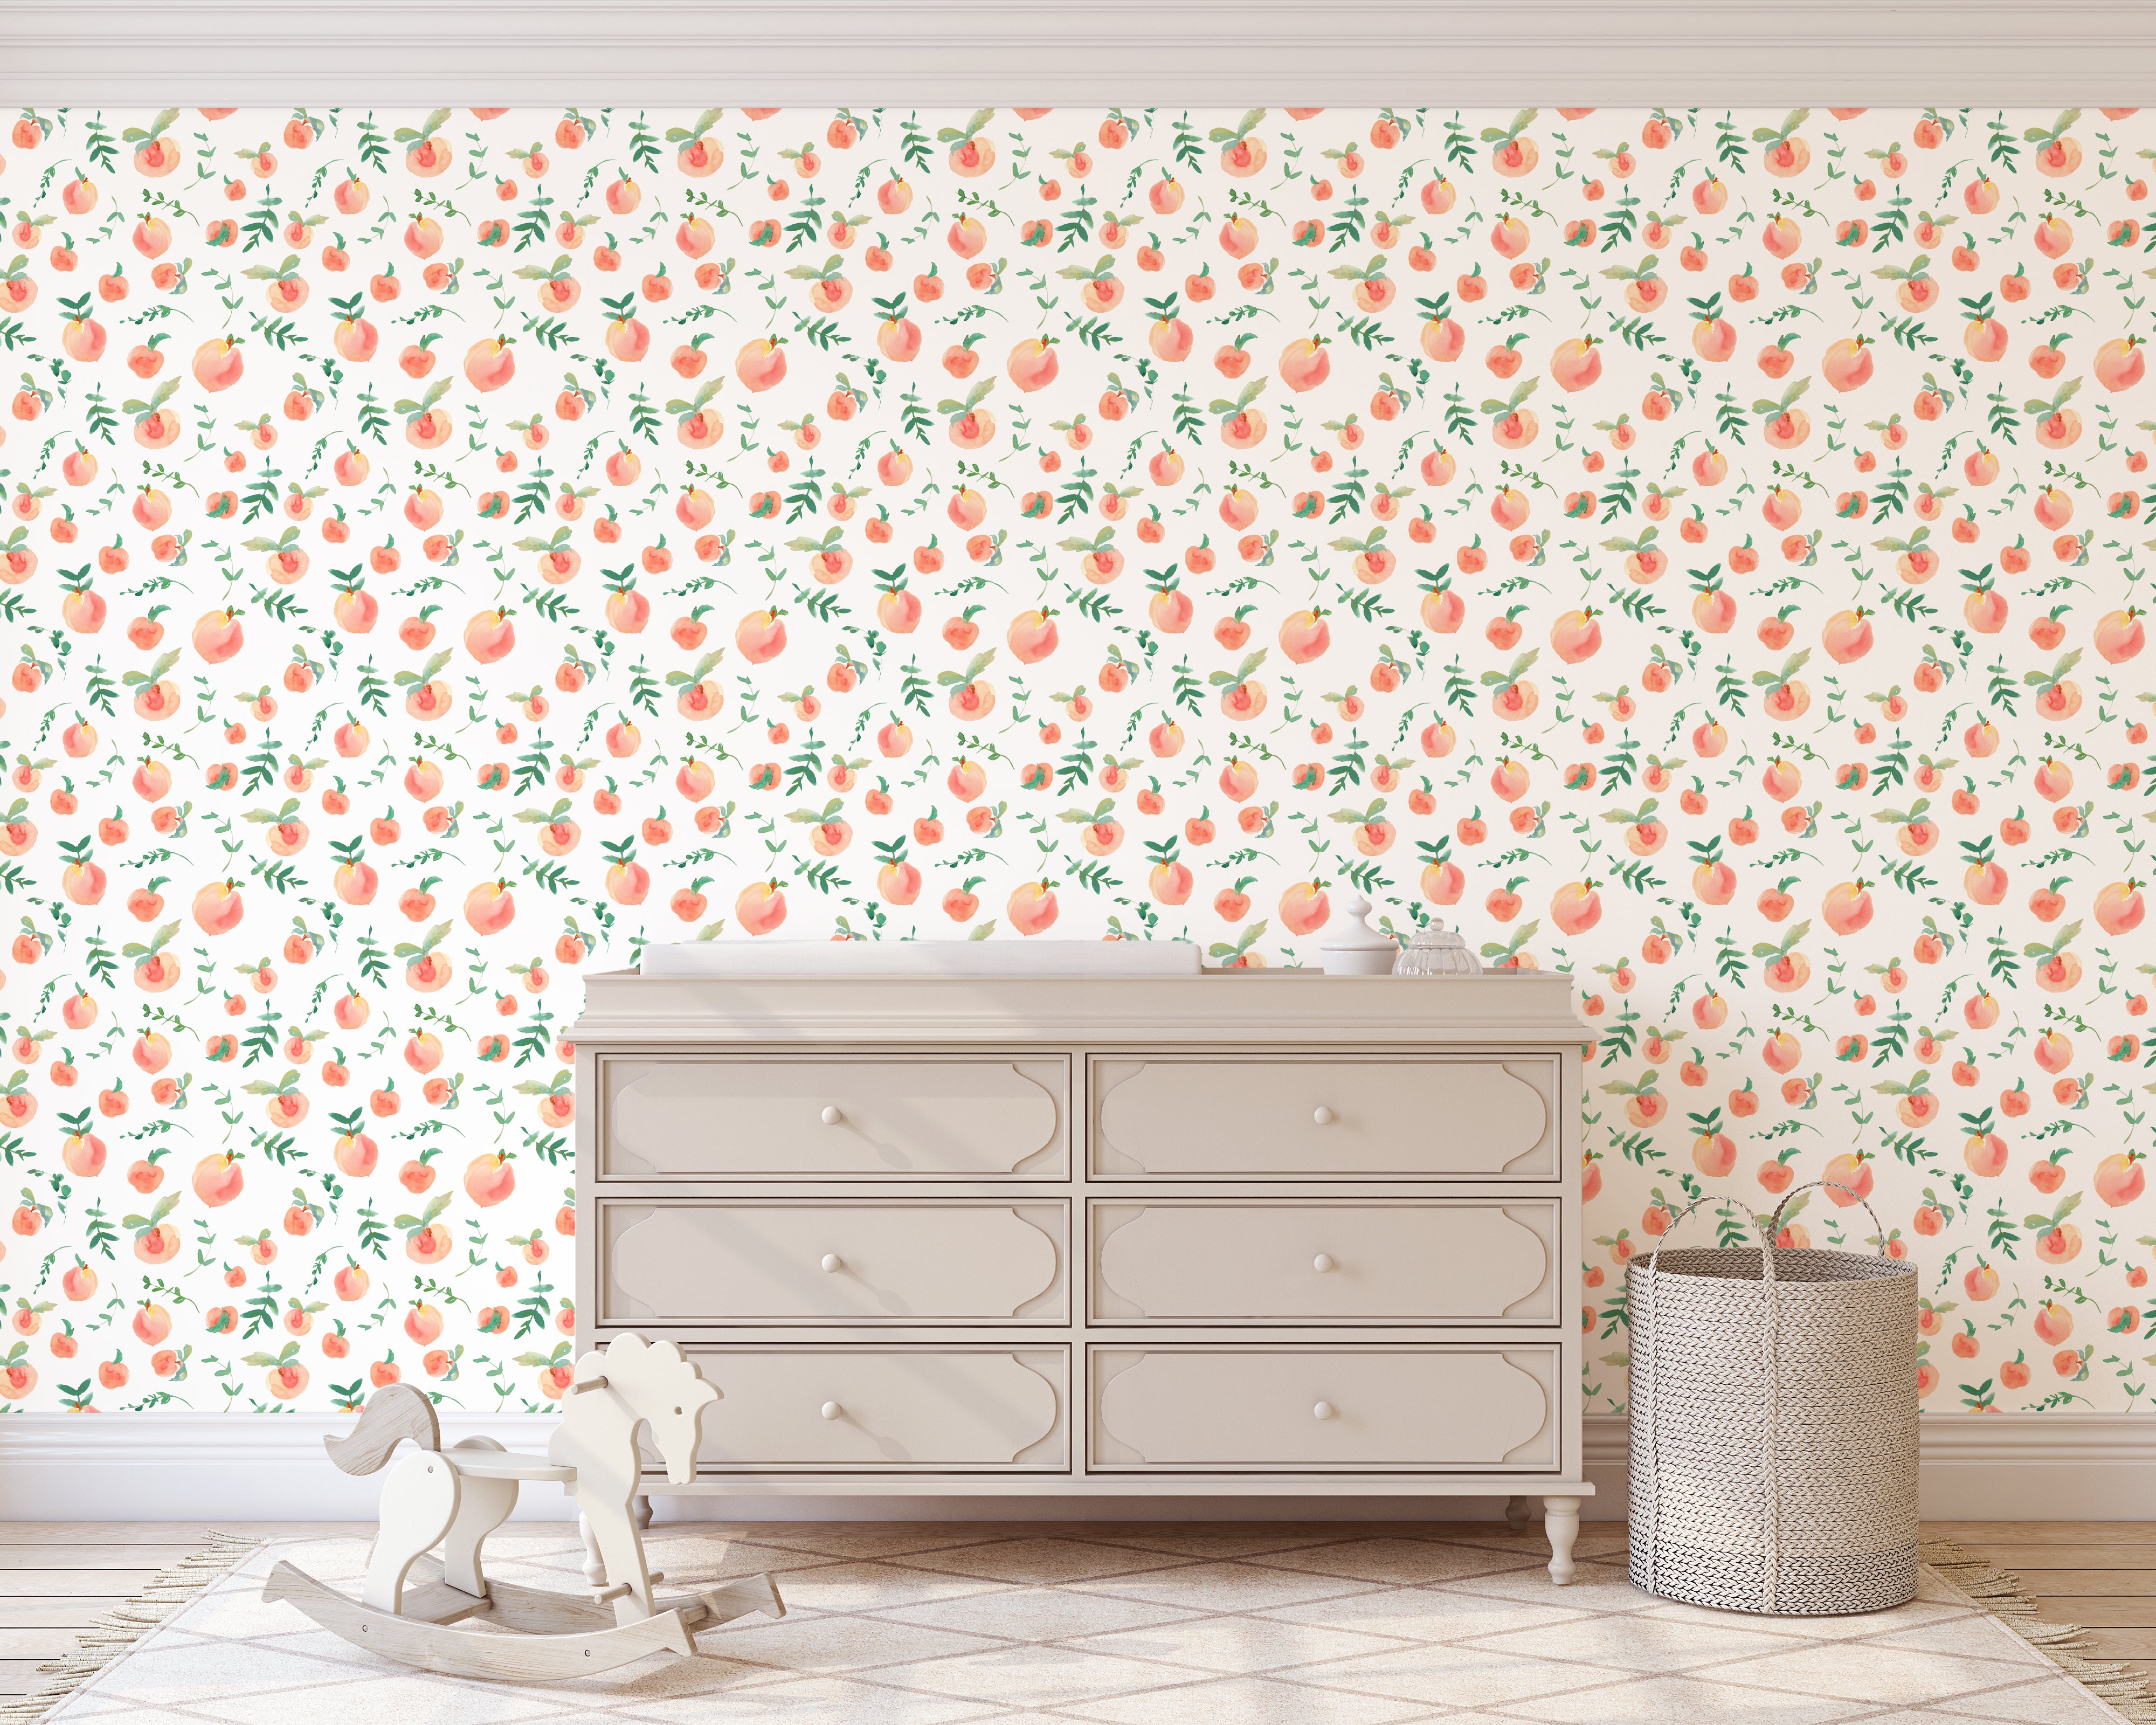 Peachy Clean - Fruit Wallpaper Wallpaper - Wall Blush from WALL BLUSH